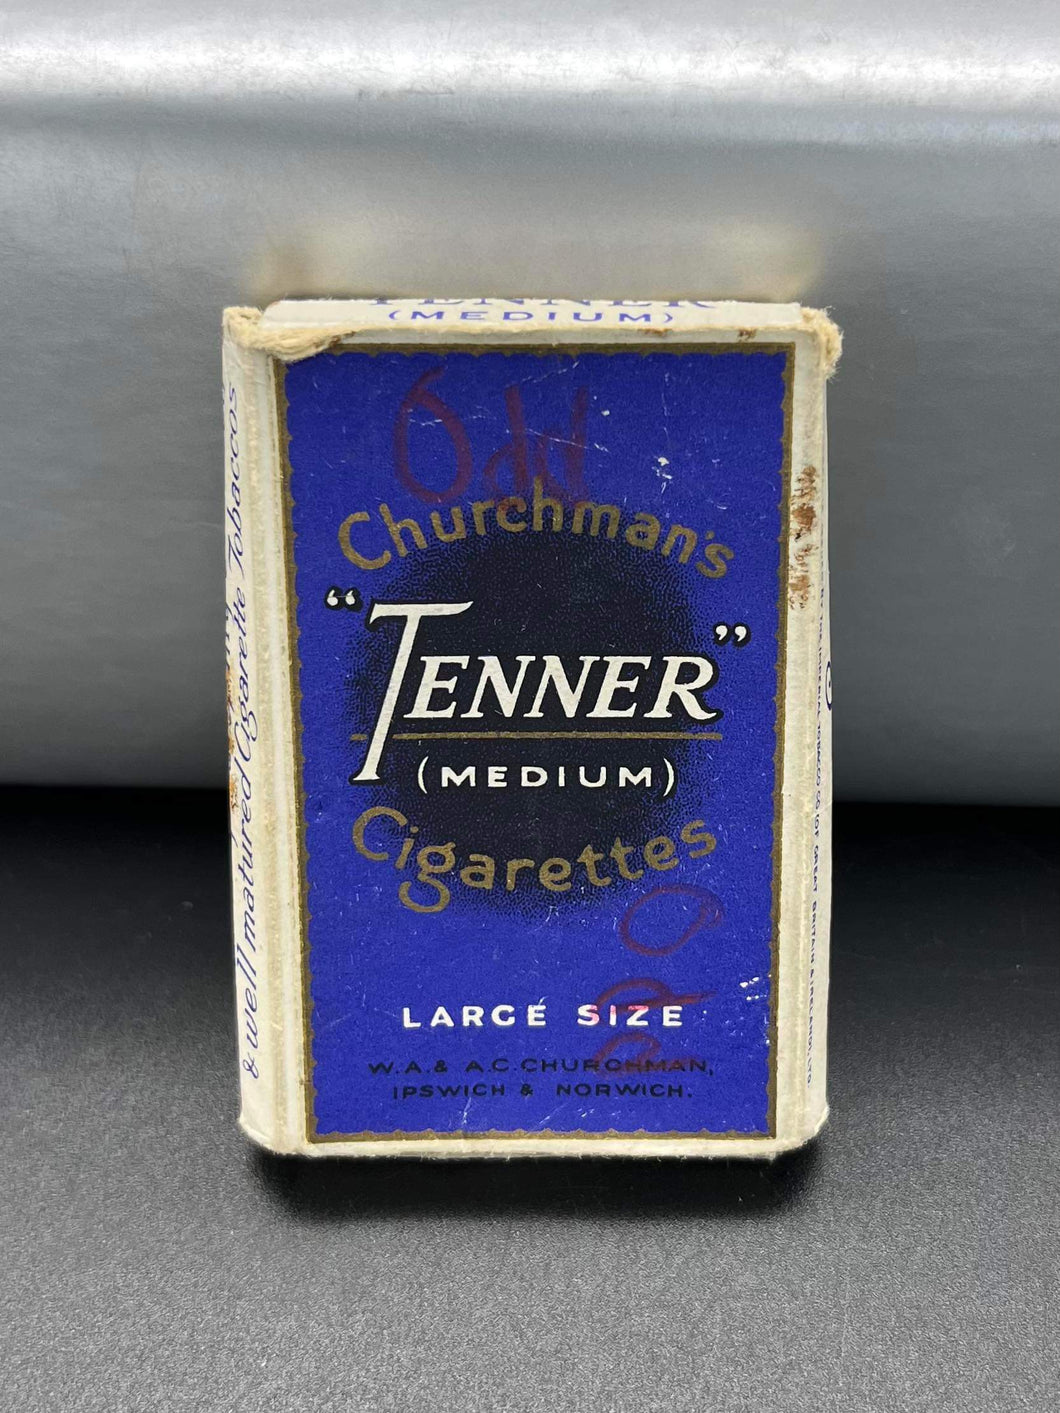 Churchman’s “Tenner” Medium Cigarette Packet